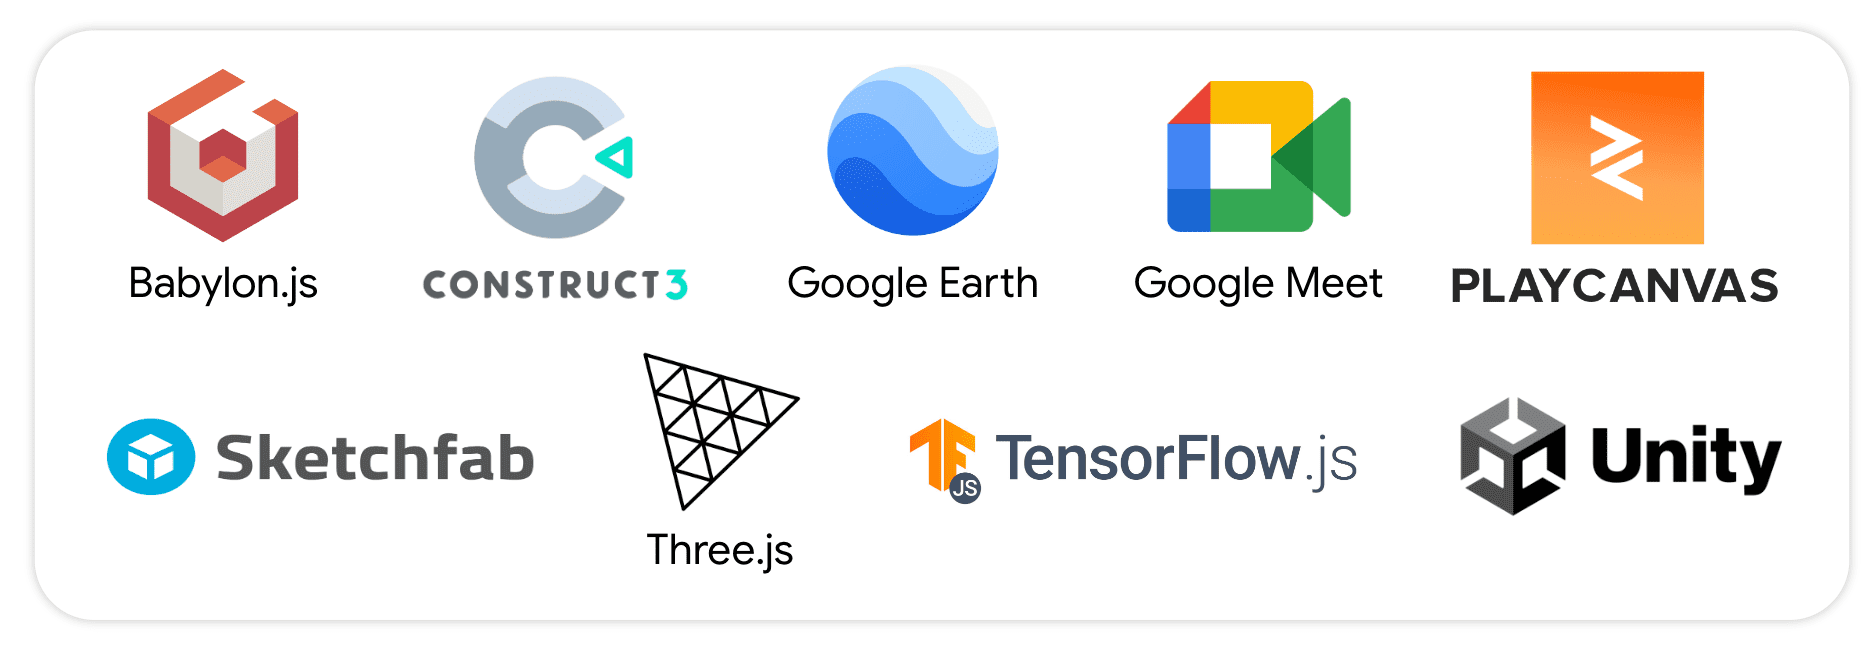 Babylon.js, Construct 3, Google Earth, Google Meet, PlayCanvas, Sketchfab, Three.JS, TensorFlow.js ve Unity.